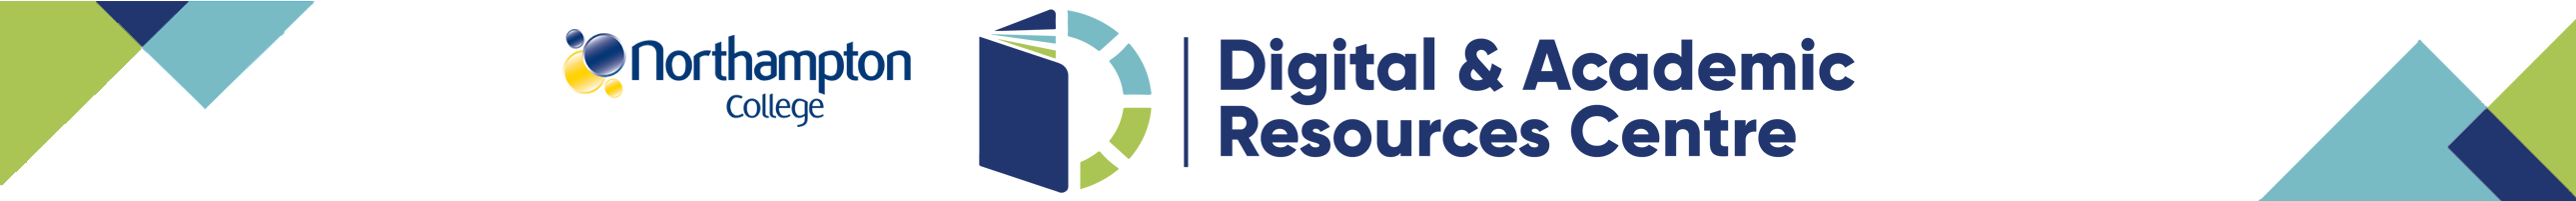 Digital & Academic Resources Centre